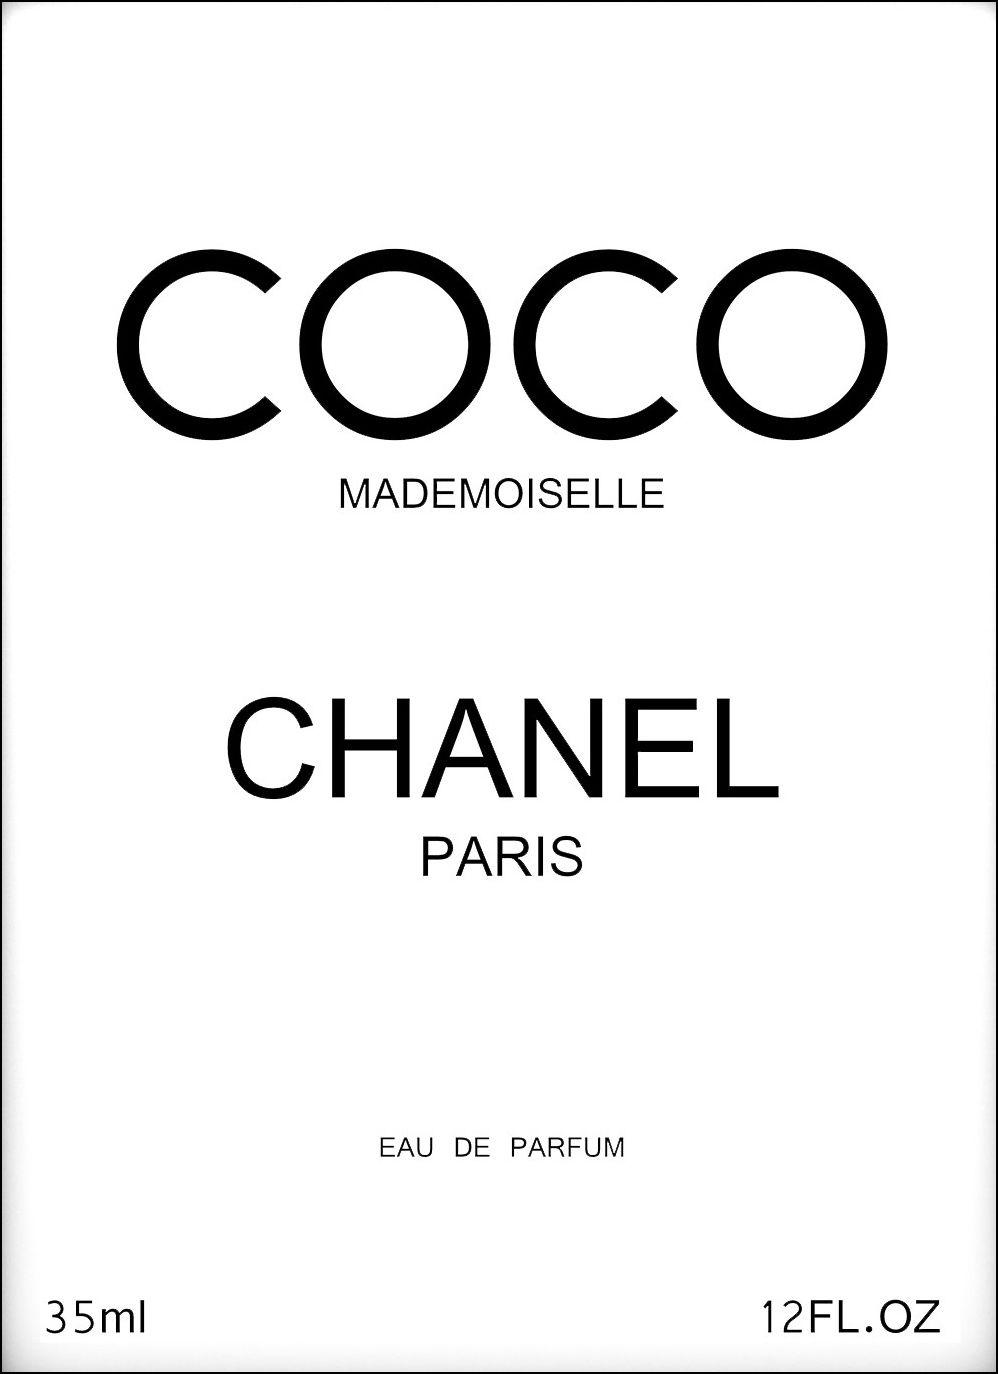 Coco Chanel Paris Logo - Coco Chanel Paris Black - 50x70 cm - BGA Fotobutik